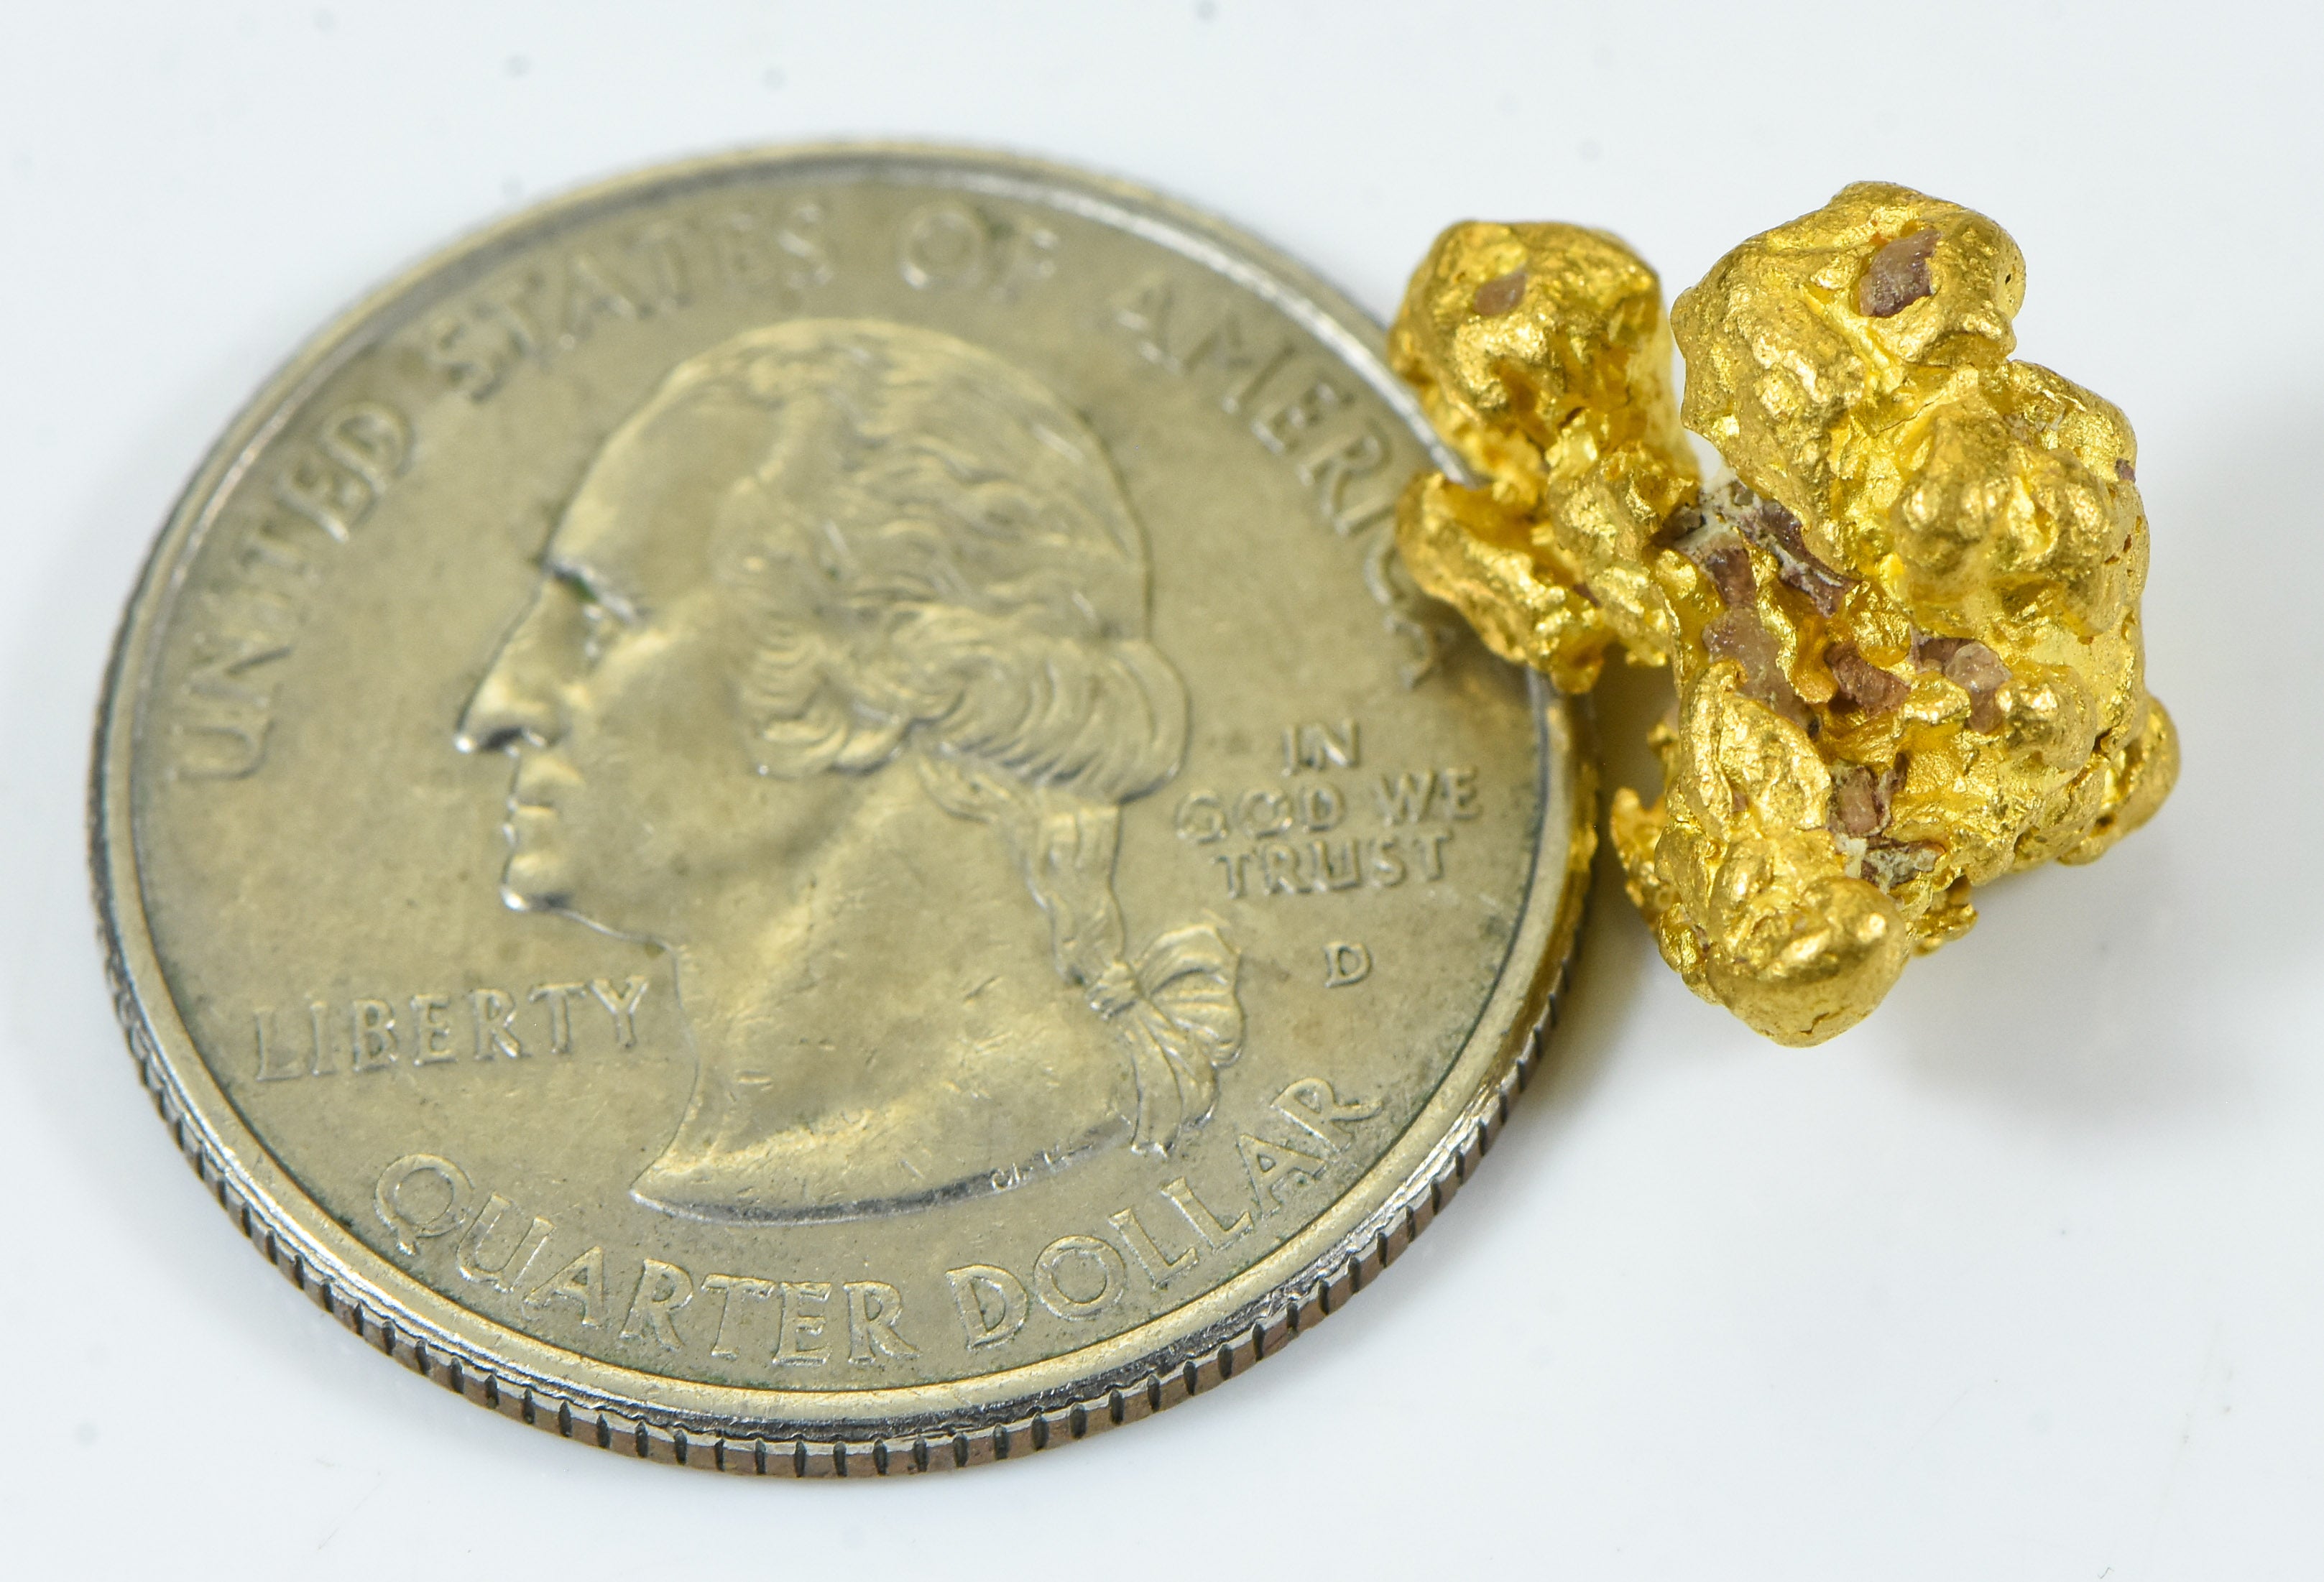 #1108 Natural Gold Nugget Australian 6.44 Grams Genuine